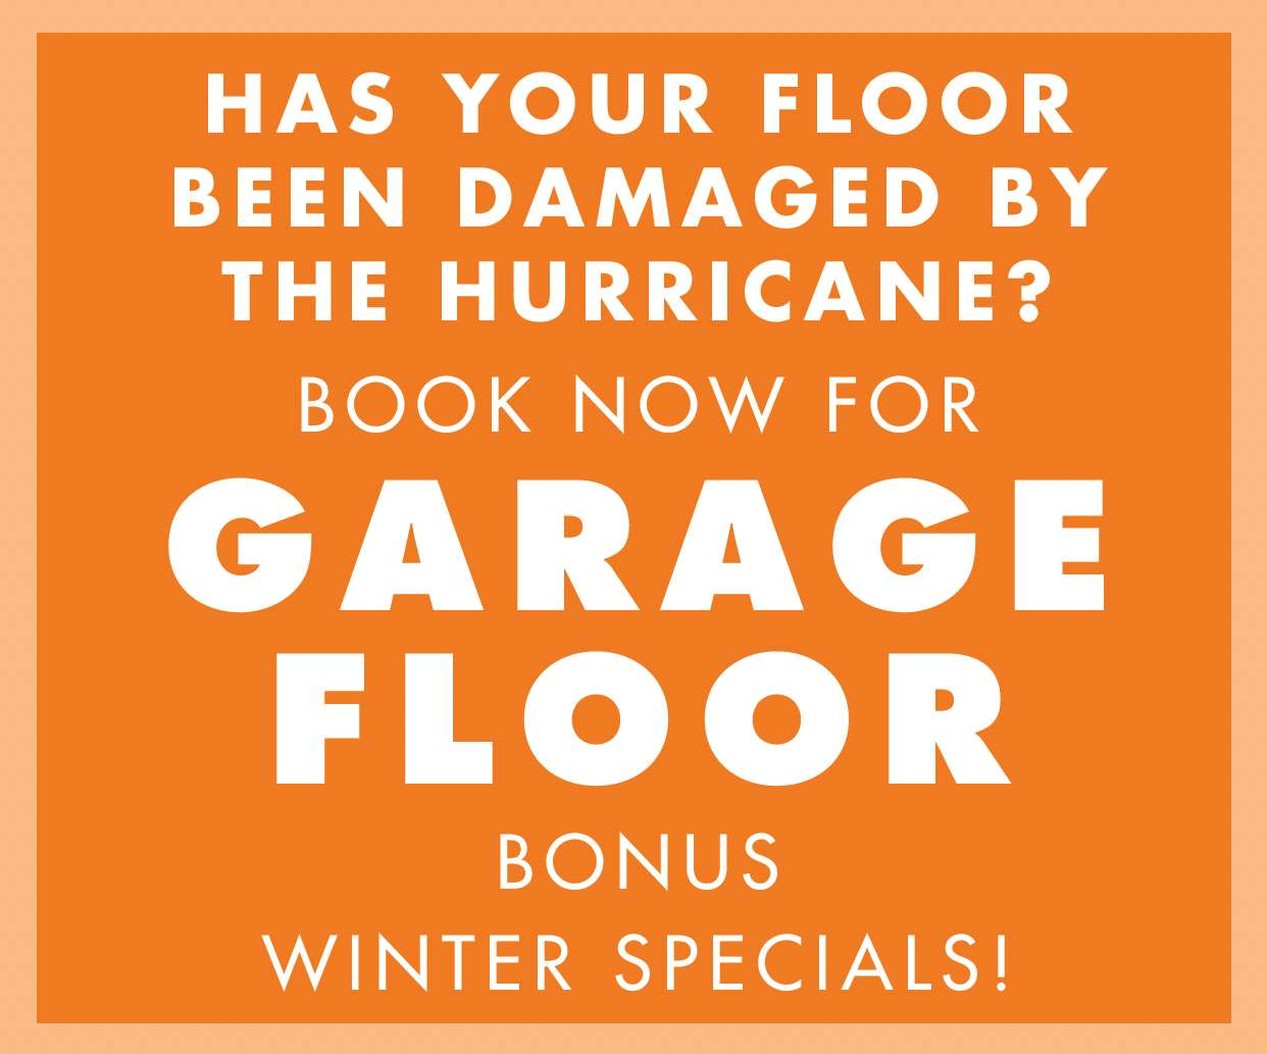 Bonus Winter Specials on Garage Floors!